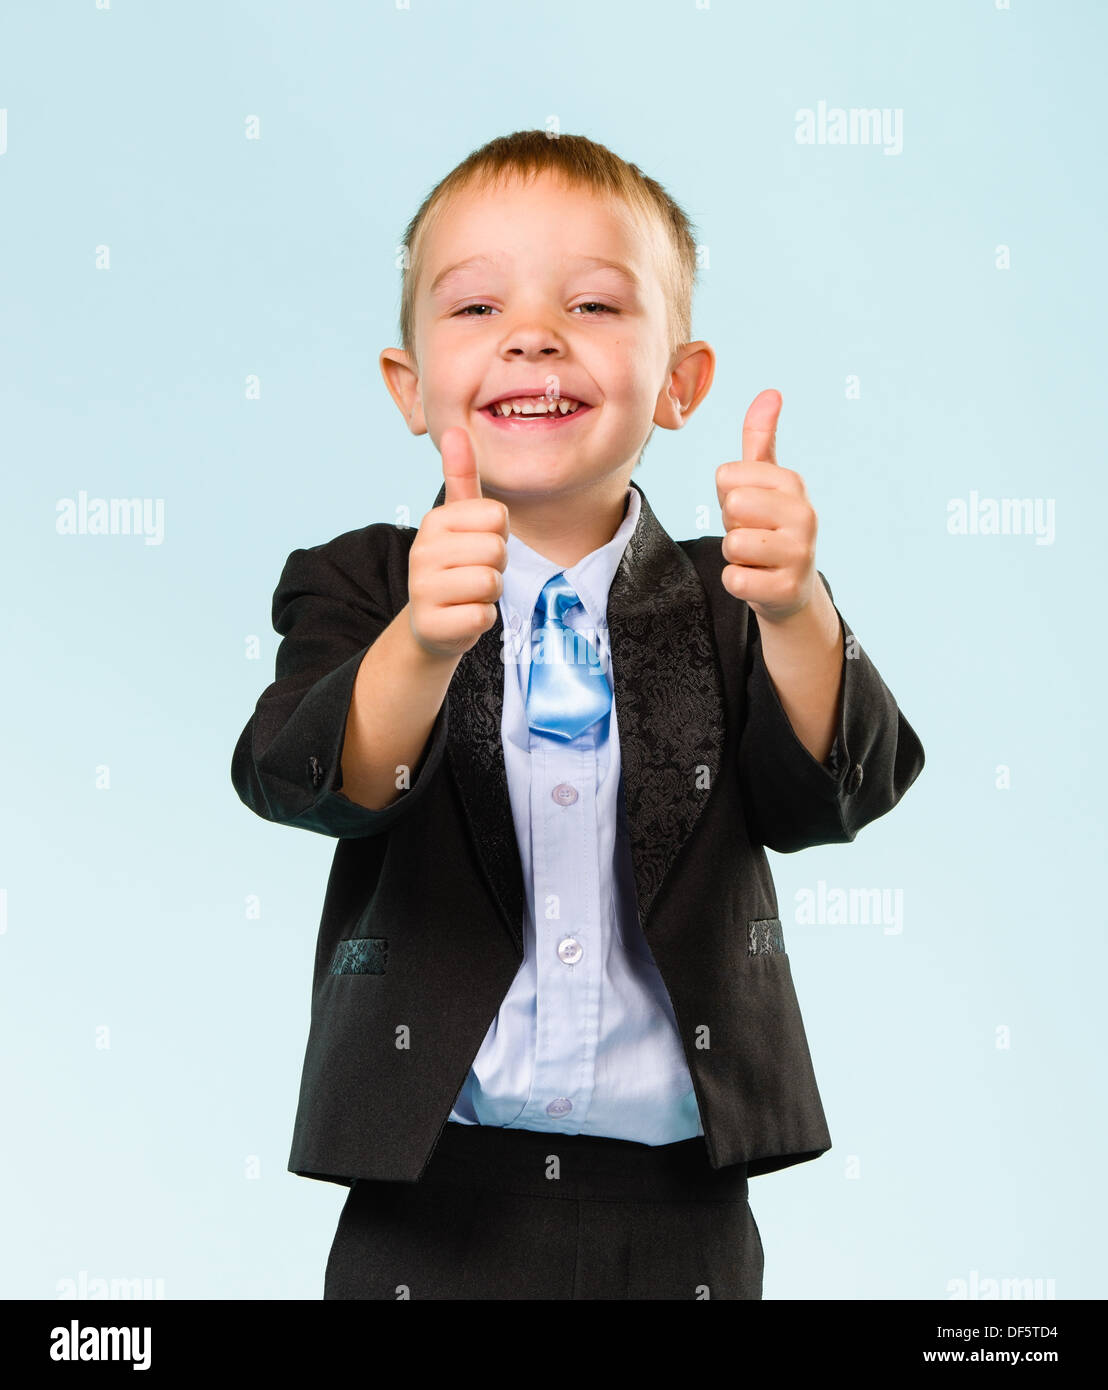 Smiling little boy wearing costume, Thumbs up, studio shot et fond bleu clair Banque D'Images